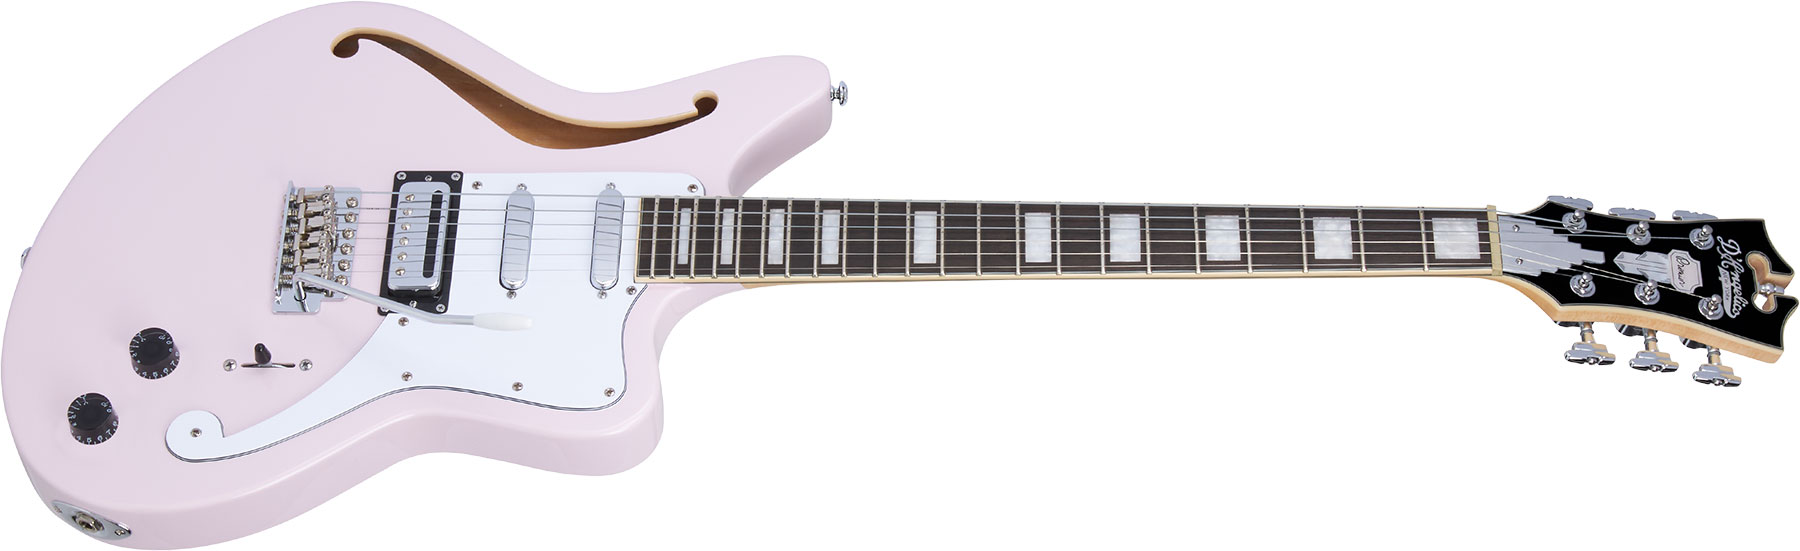 D'angelico Bedford Sh Premier Hss Trem Ova - Shell Pink - Semi-hollow electric guitar - Variation 1